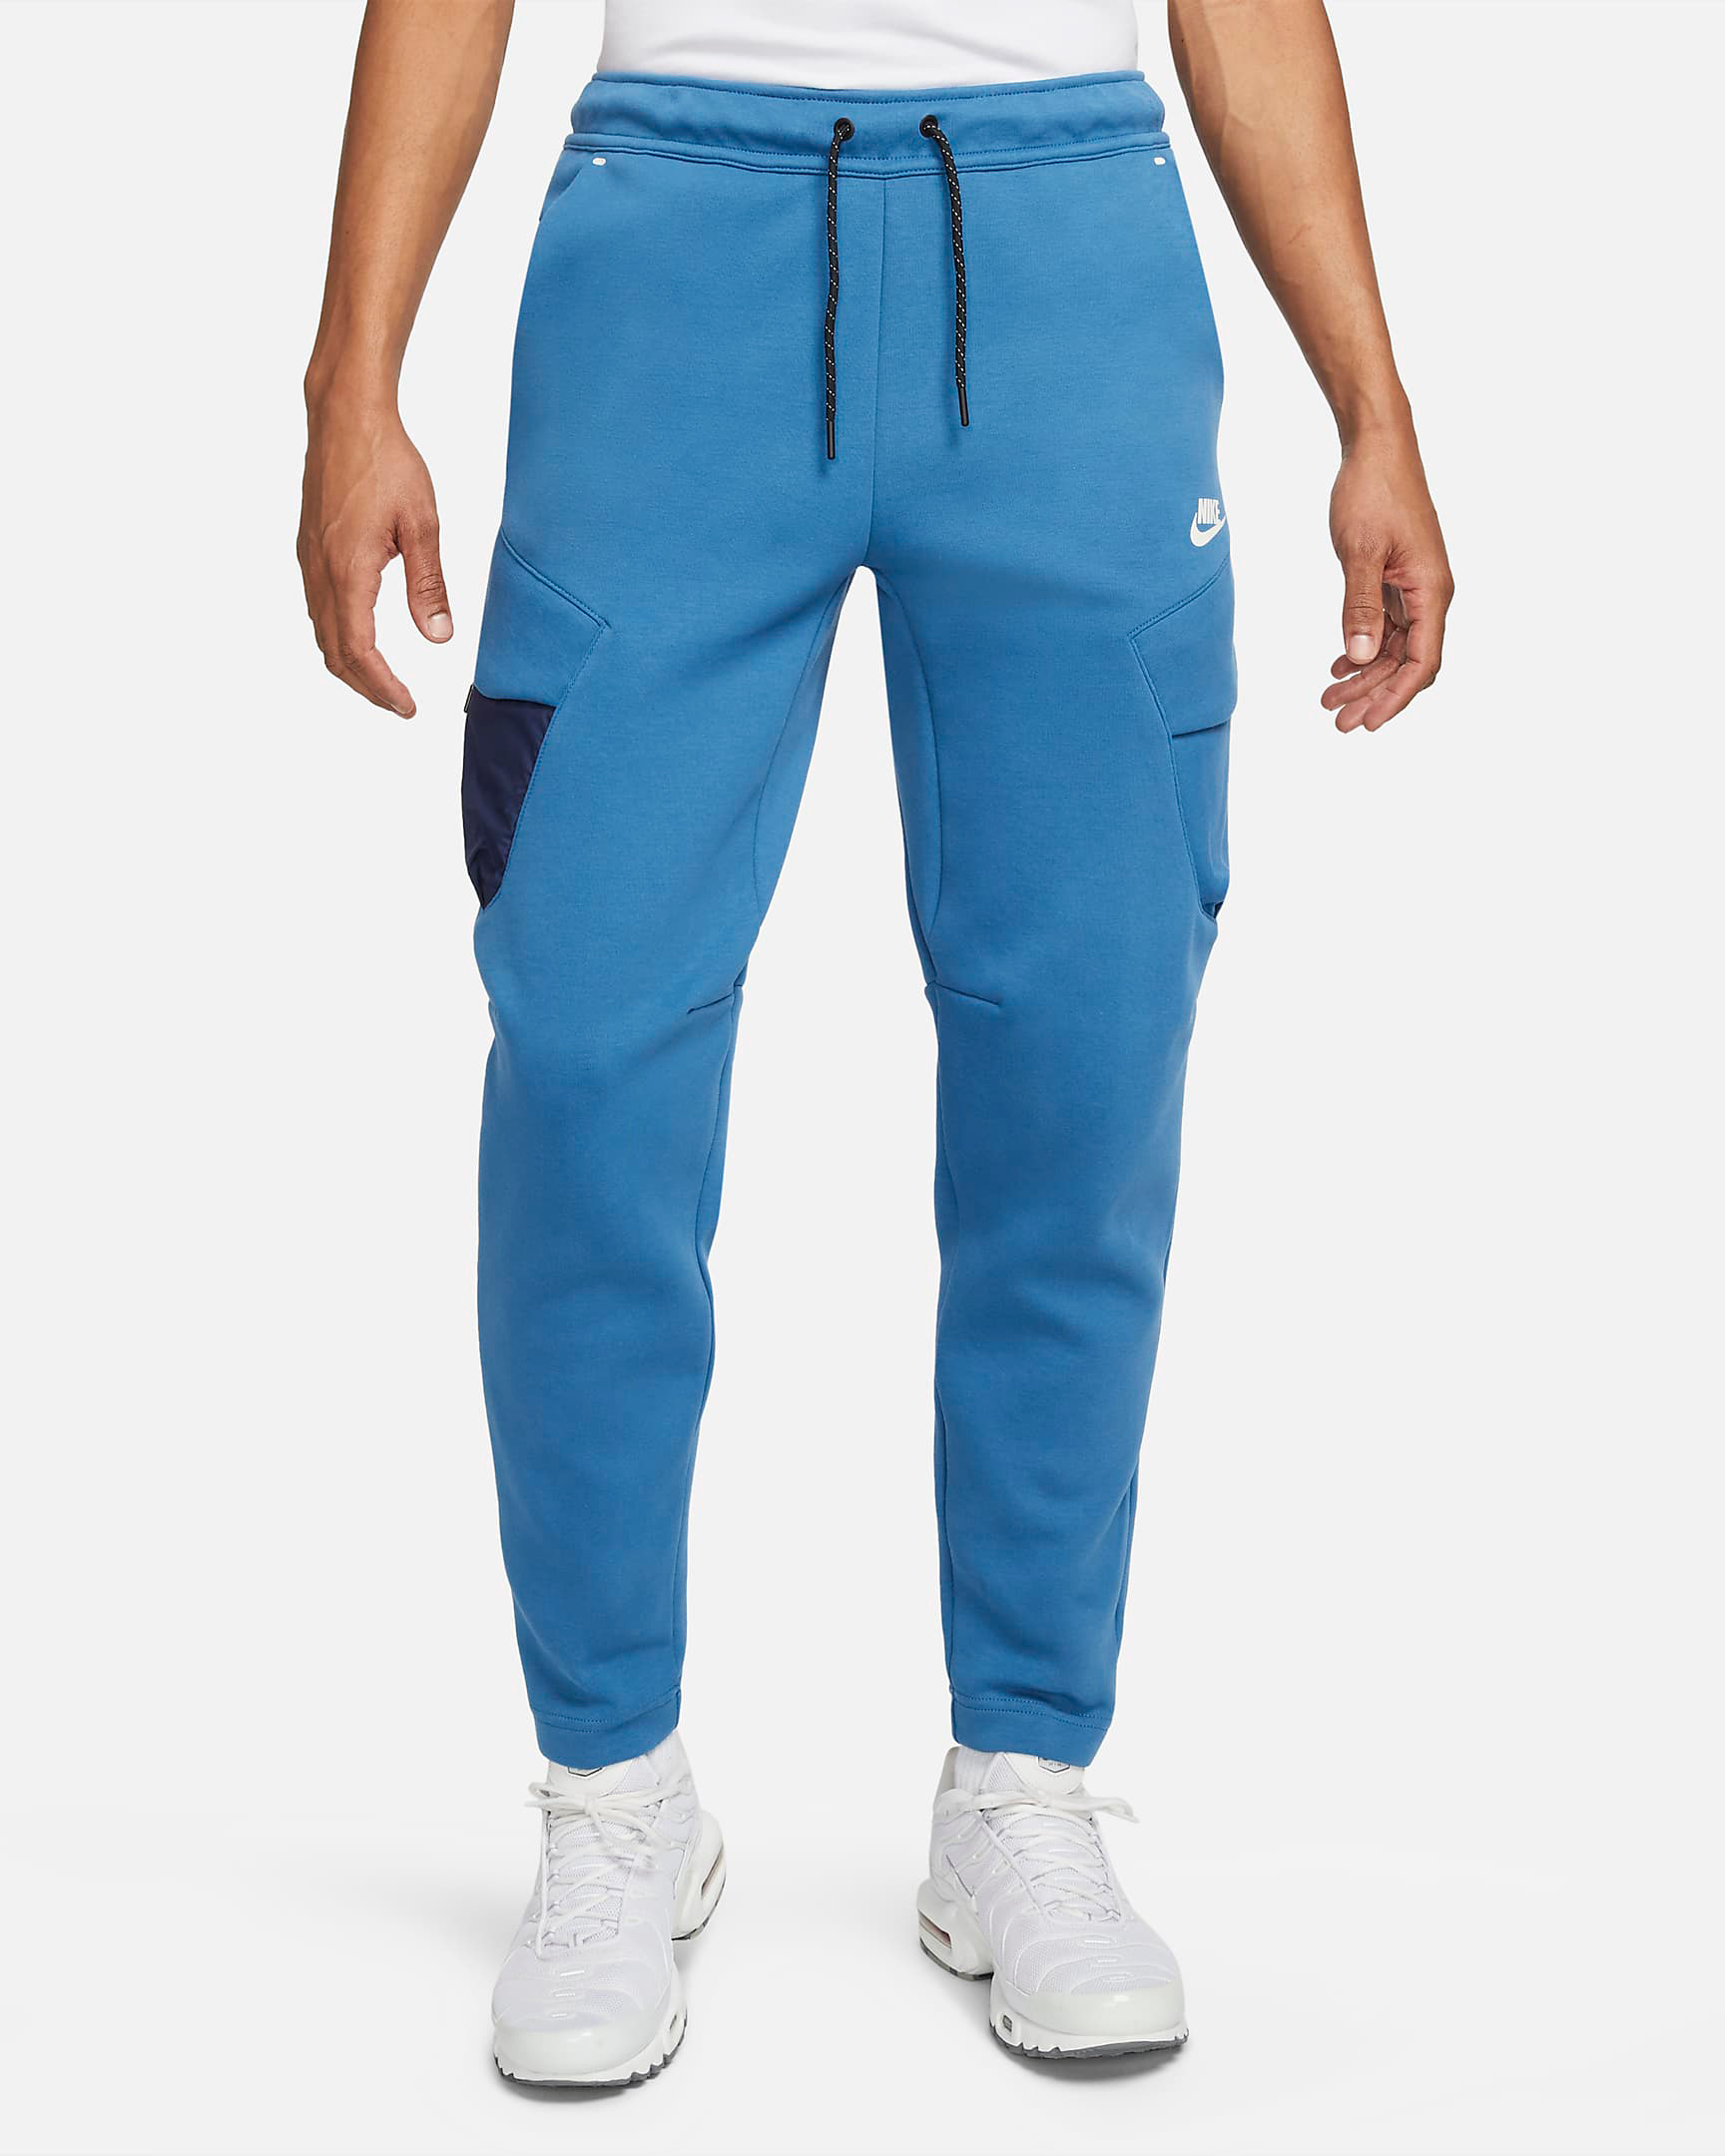 nike-tech-fleece-utility-pants-dark-marina-blue-1